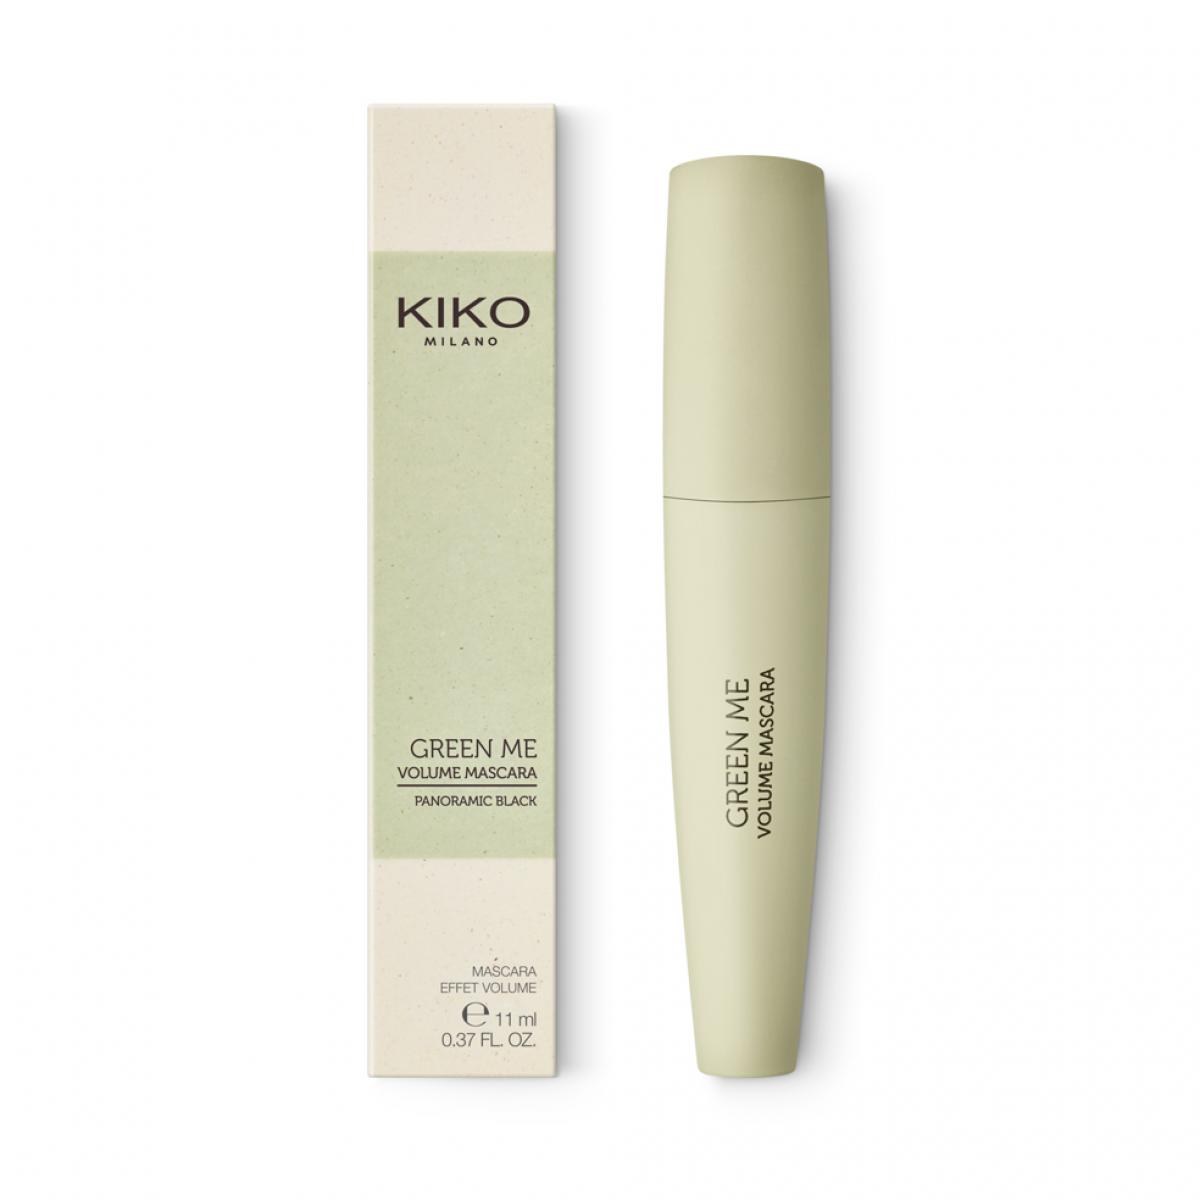 KIKO Milano Green Me Volume Mascara Pure Black 101 (11 ml)